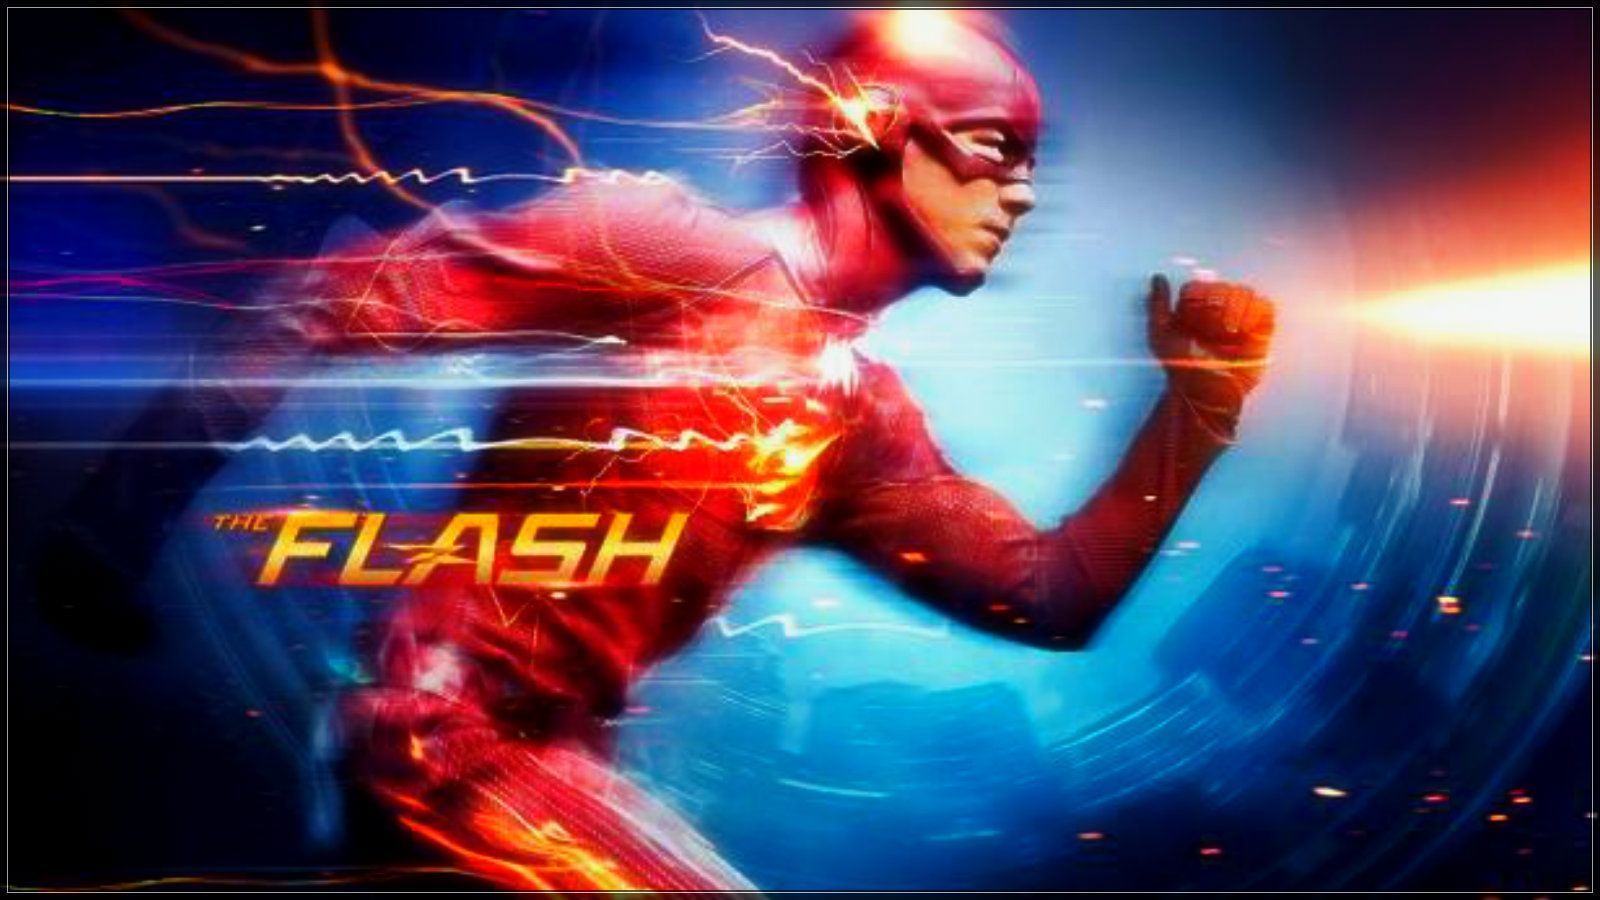 The Flash - The Flash (CW) Wallpaper (37656140) - Fanpop